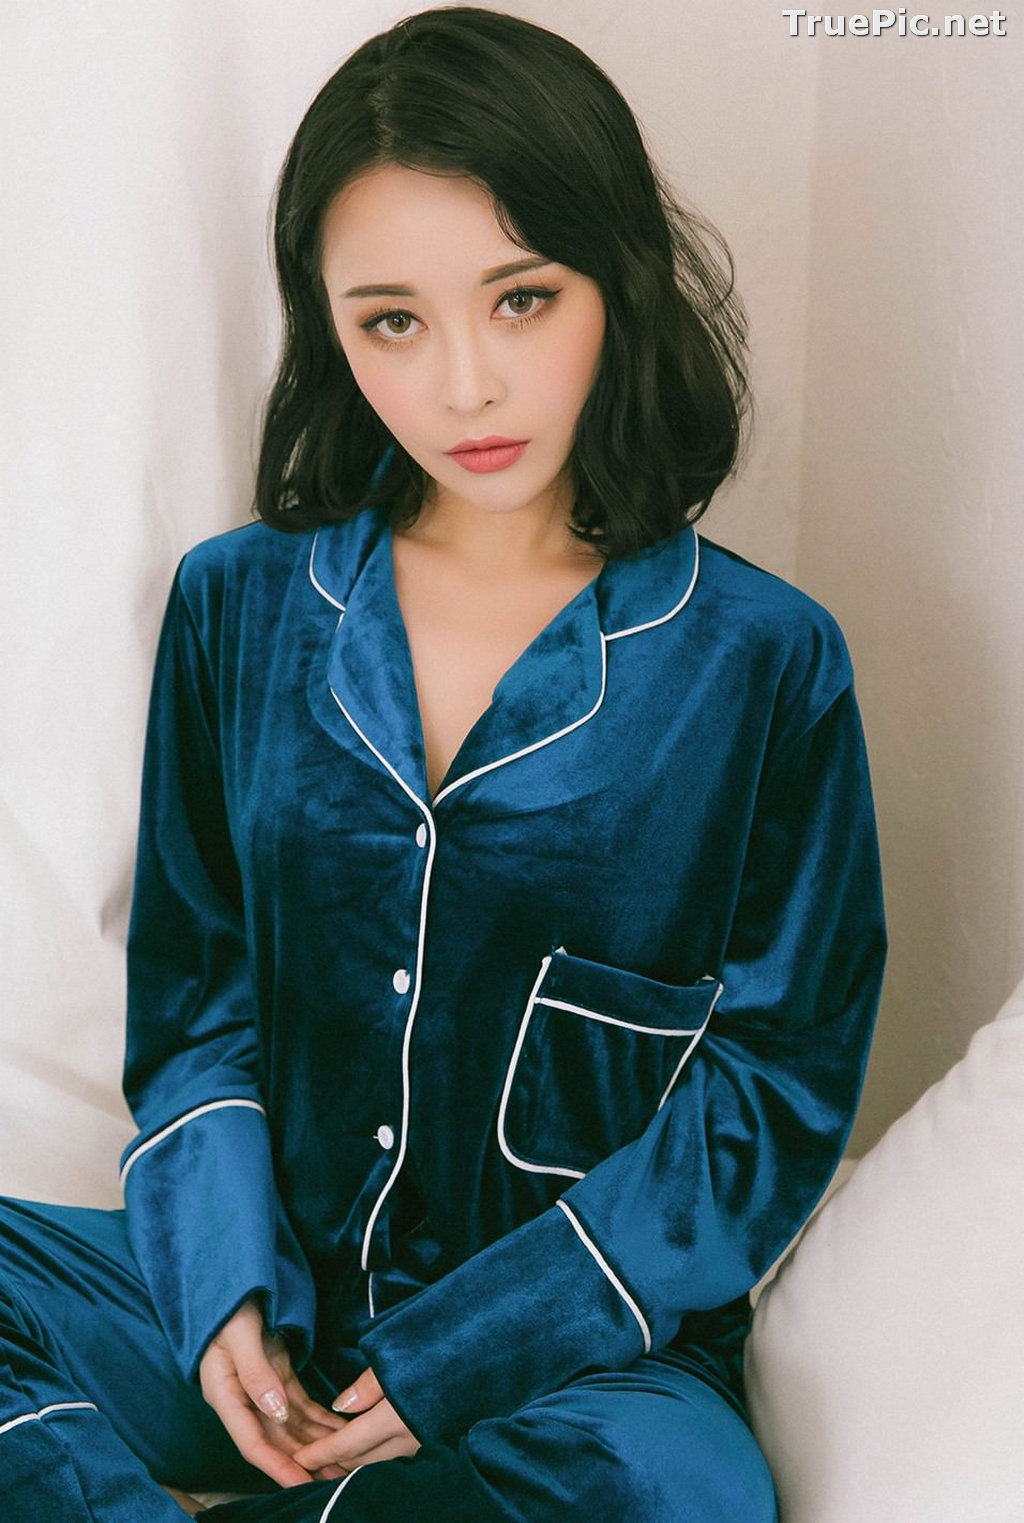 Ryu Hyeonju - Korean Fashion Model - Pijama and Lingerie Set - TruePic